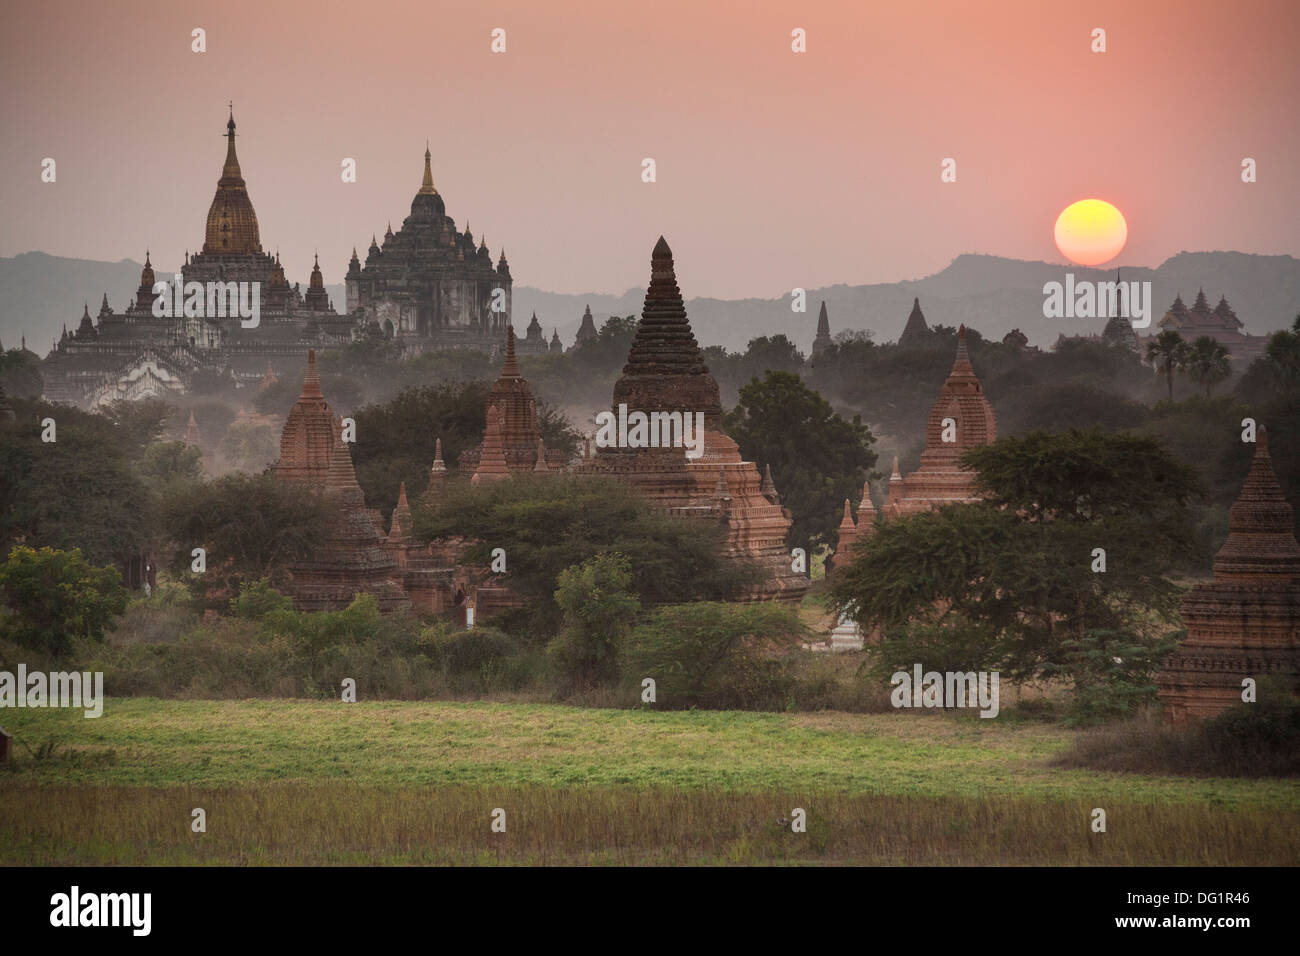 Ananda Temple on left and Thatbyinnyu Temple adjacent to Ananda Temple, at sunset, Bagan, Myanmar, (Burma) Stock Photo